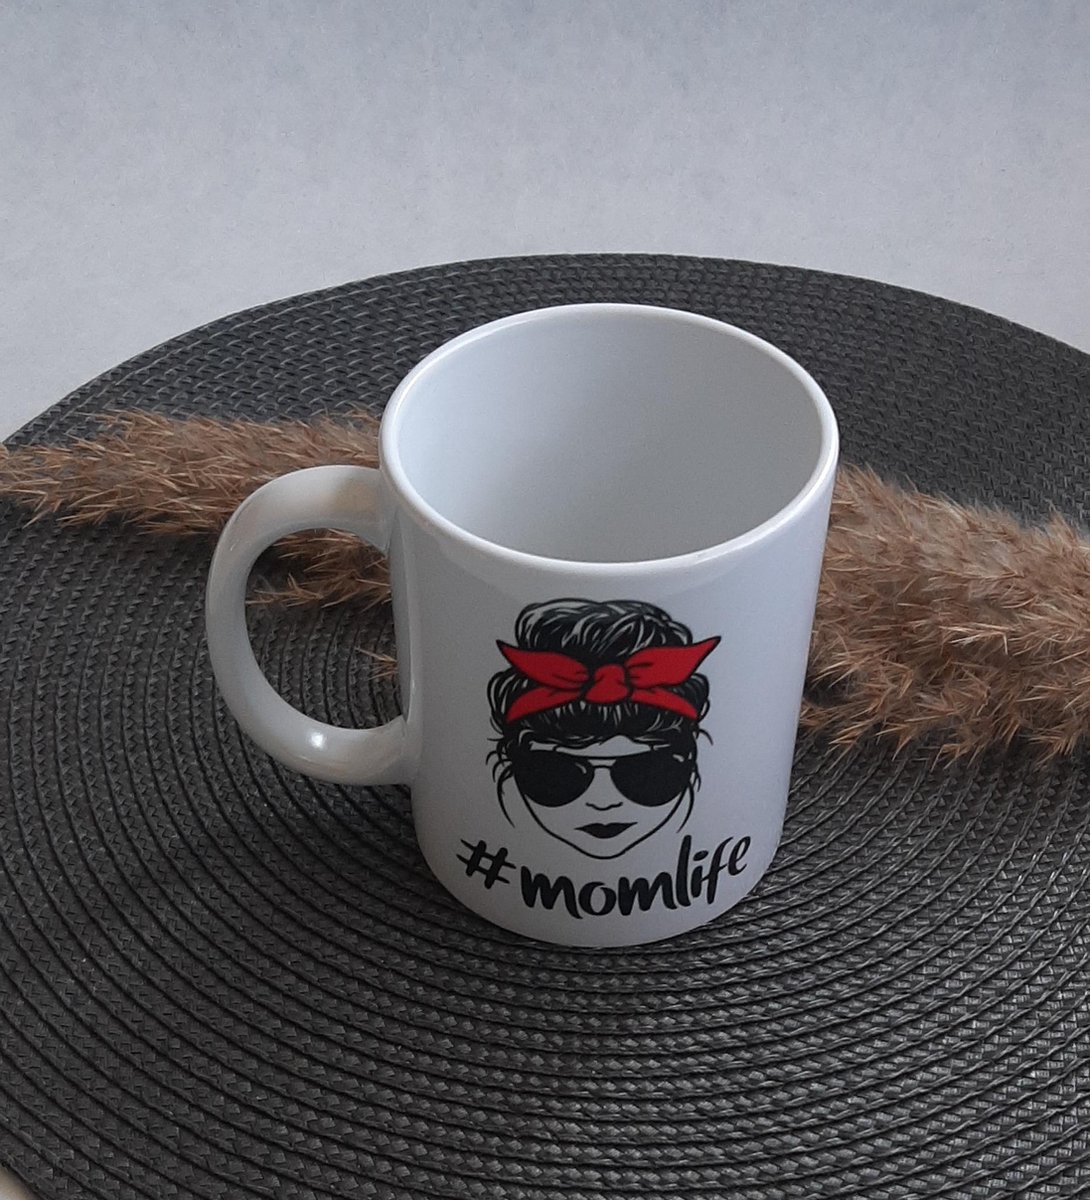 Mint11 - #momlife - mok - koffiebeker - moederdagcadeau - koffiemok - koffie - verjaardagscadeau